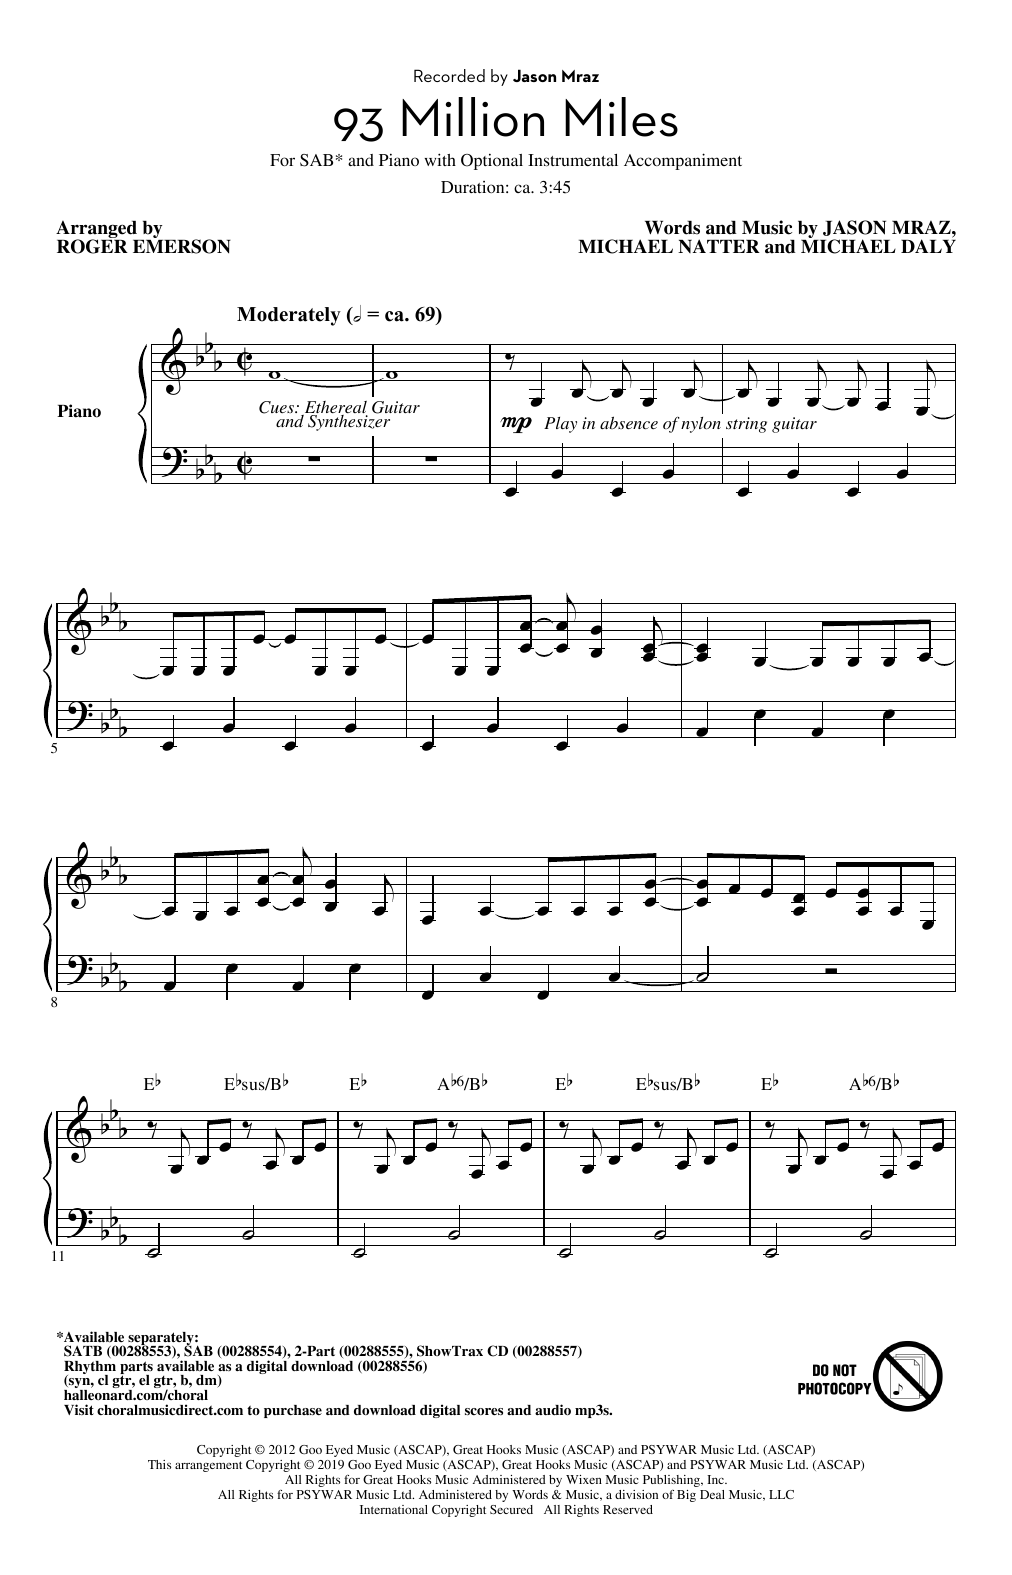 Jason Mraz 93 Million Miles (arr. Roger Emerson) sheet music notes and chords arranged for SATB Choir